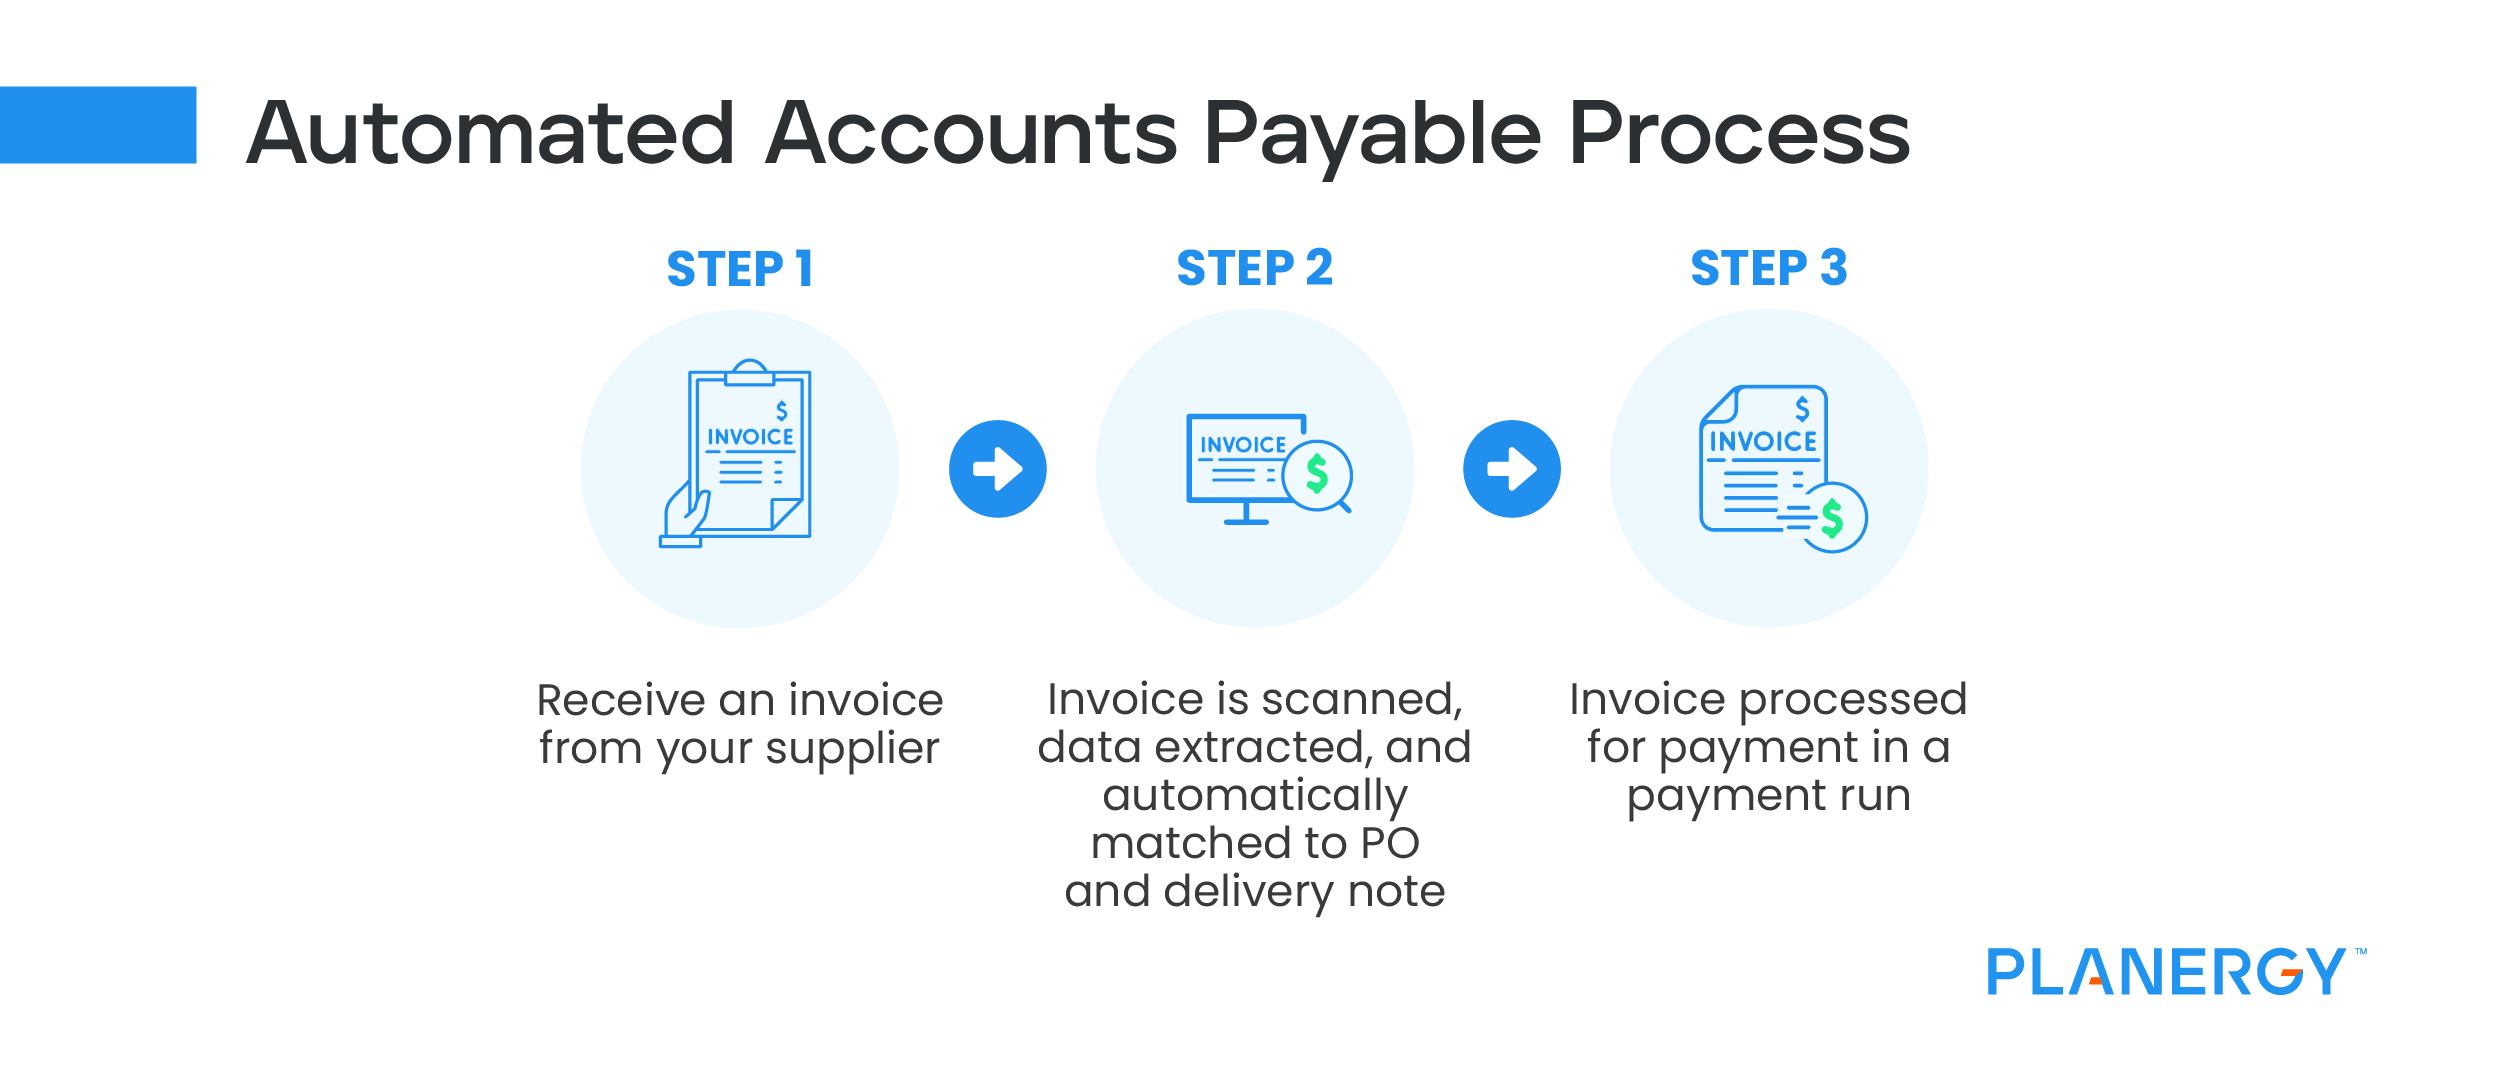 Automated Accounts Payable Process